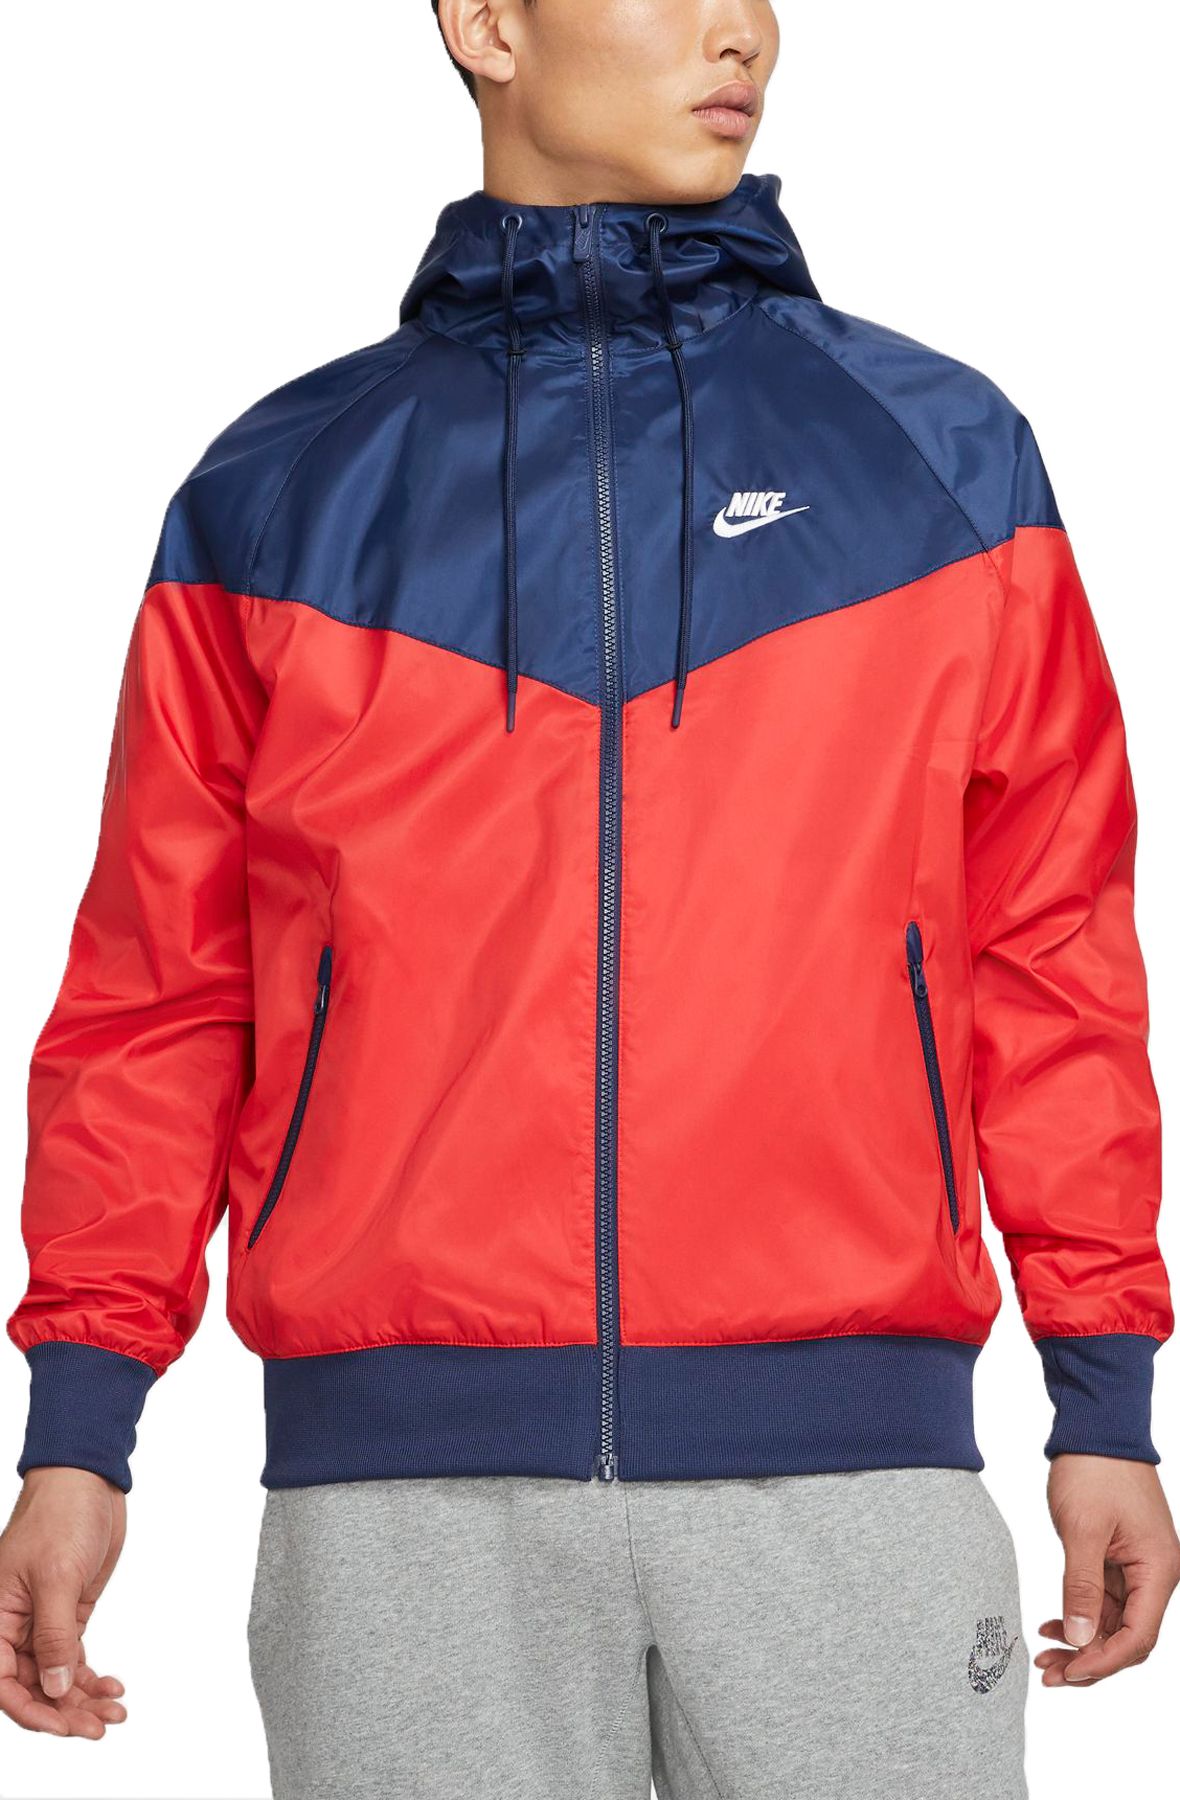 Empotrar Soldado Catarata NIKE Sportswear Windrunner Hooded Jacket DA0001 657 - Shiekh